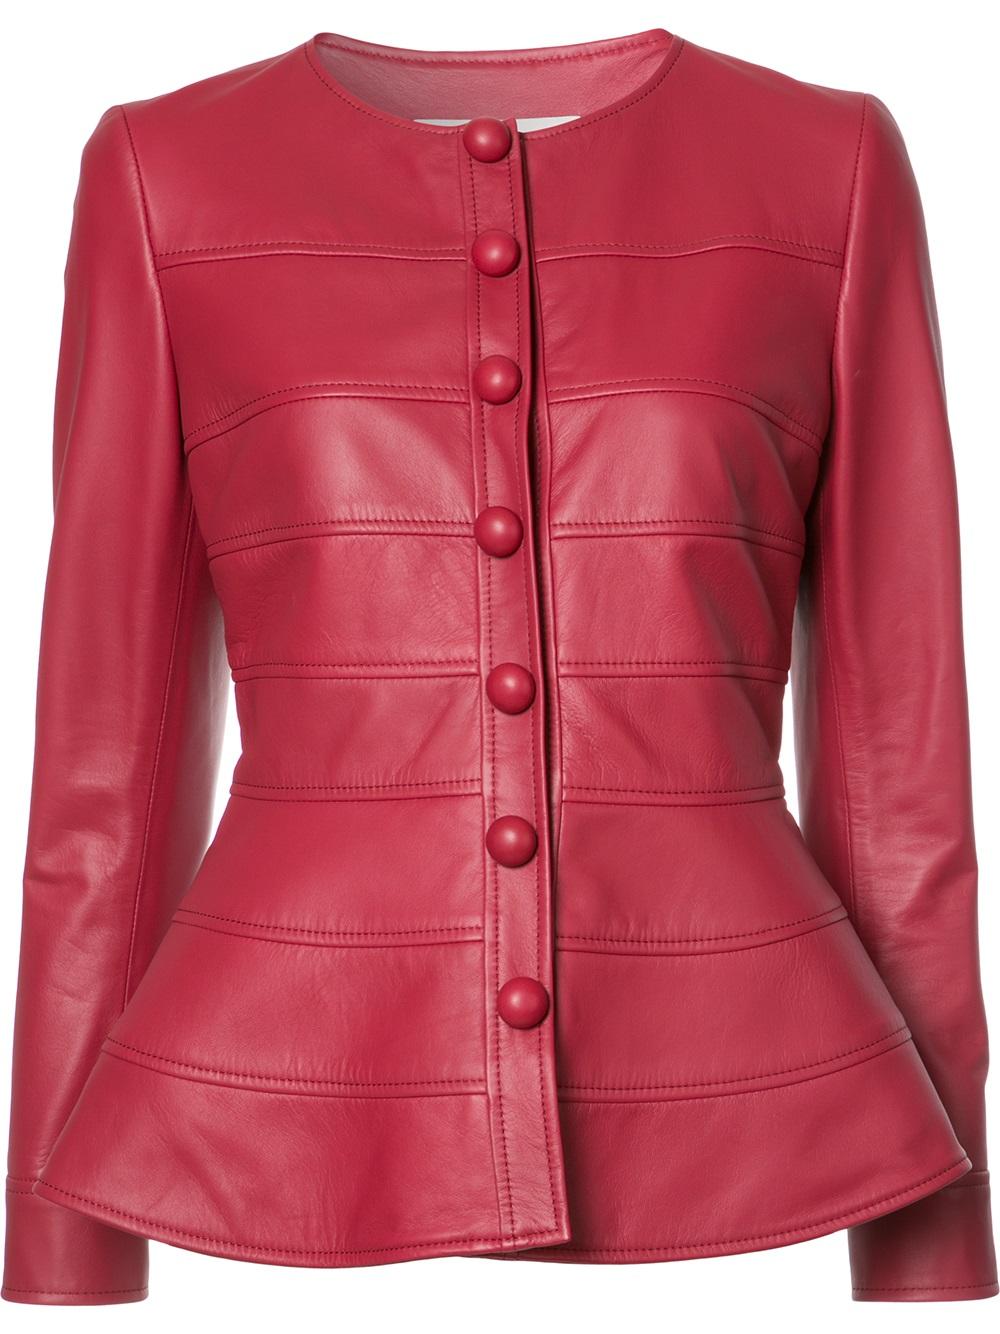 Carolina Herrera Leather Peplum Jacket in Red